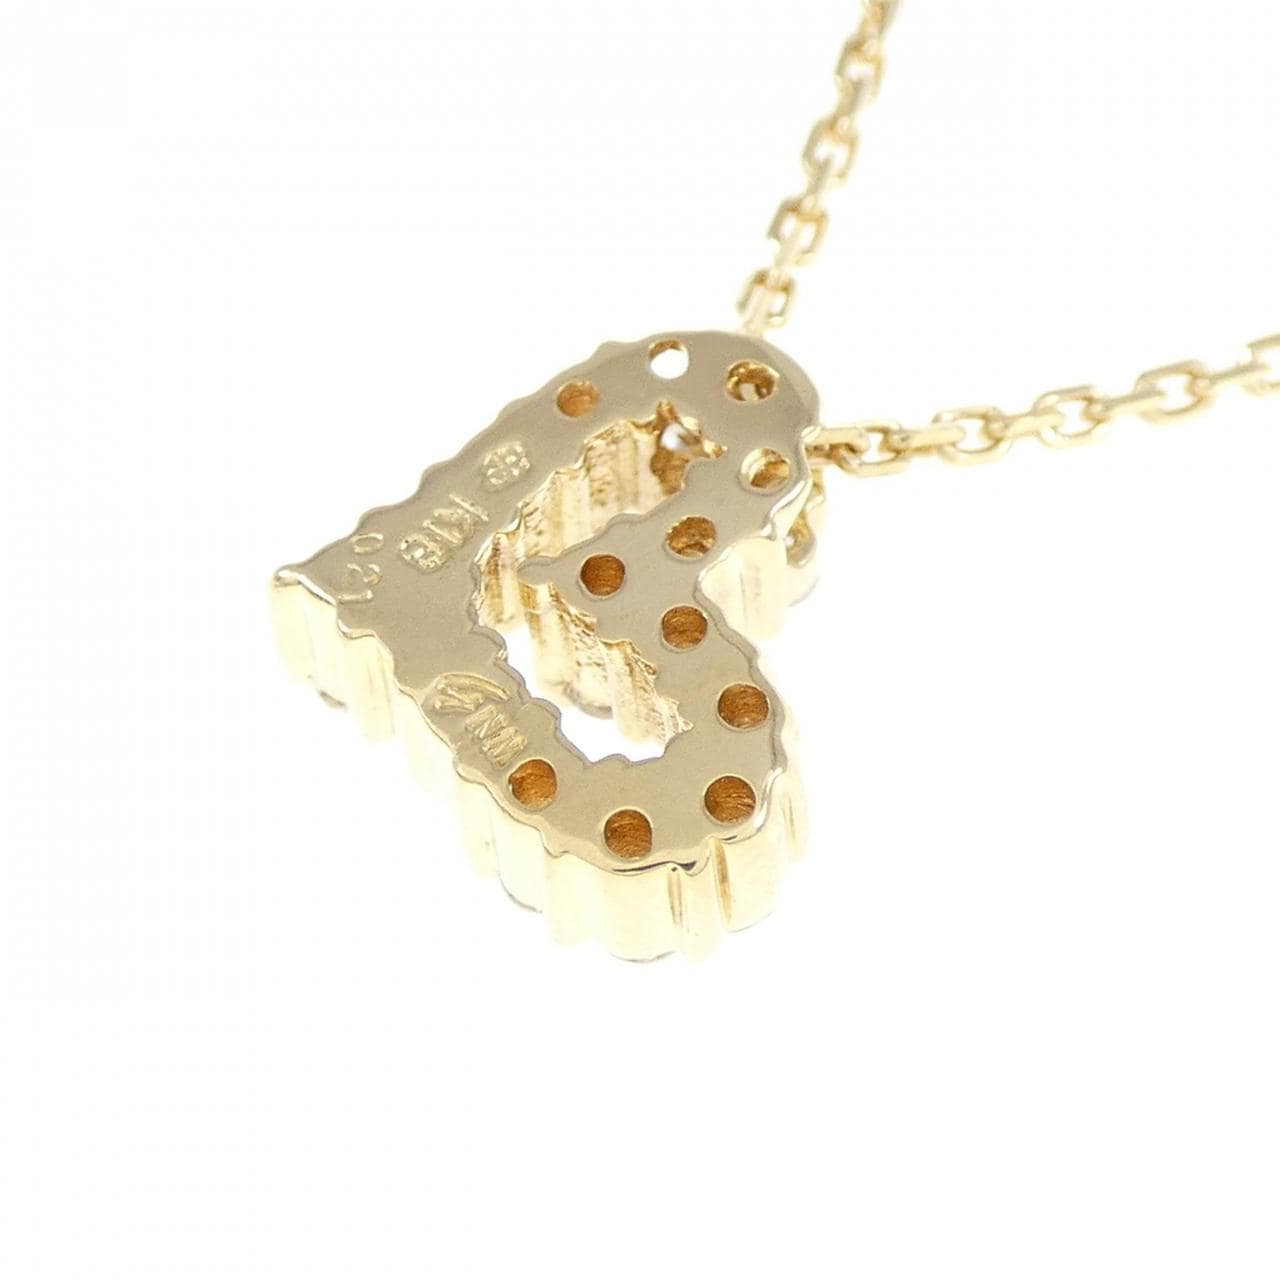 K18YG Heart Diamond Necklace 0.21CT